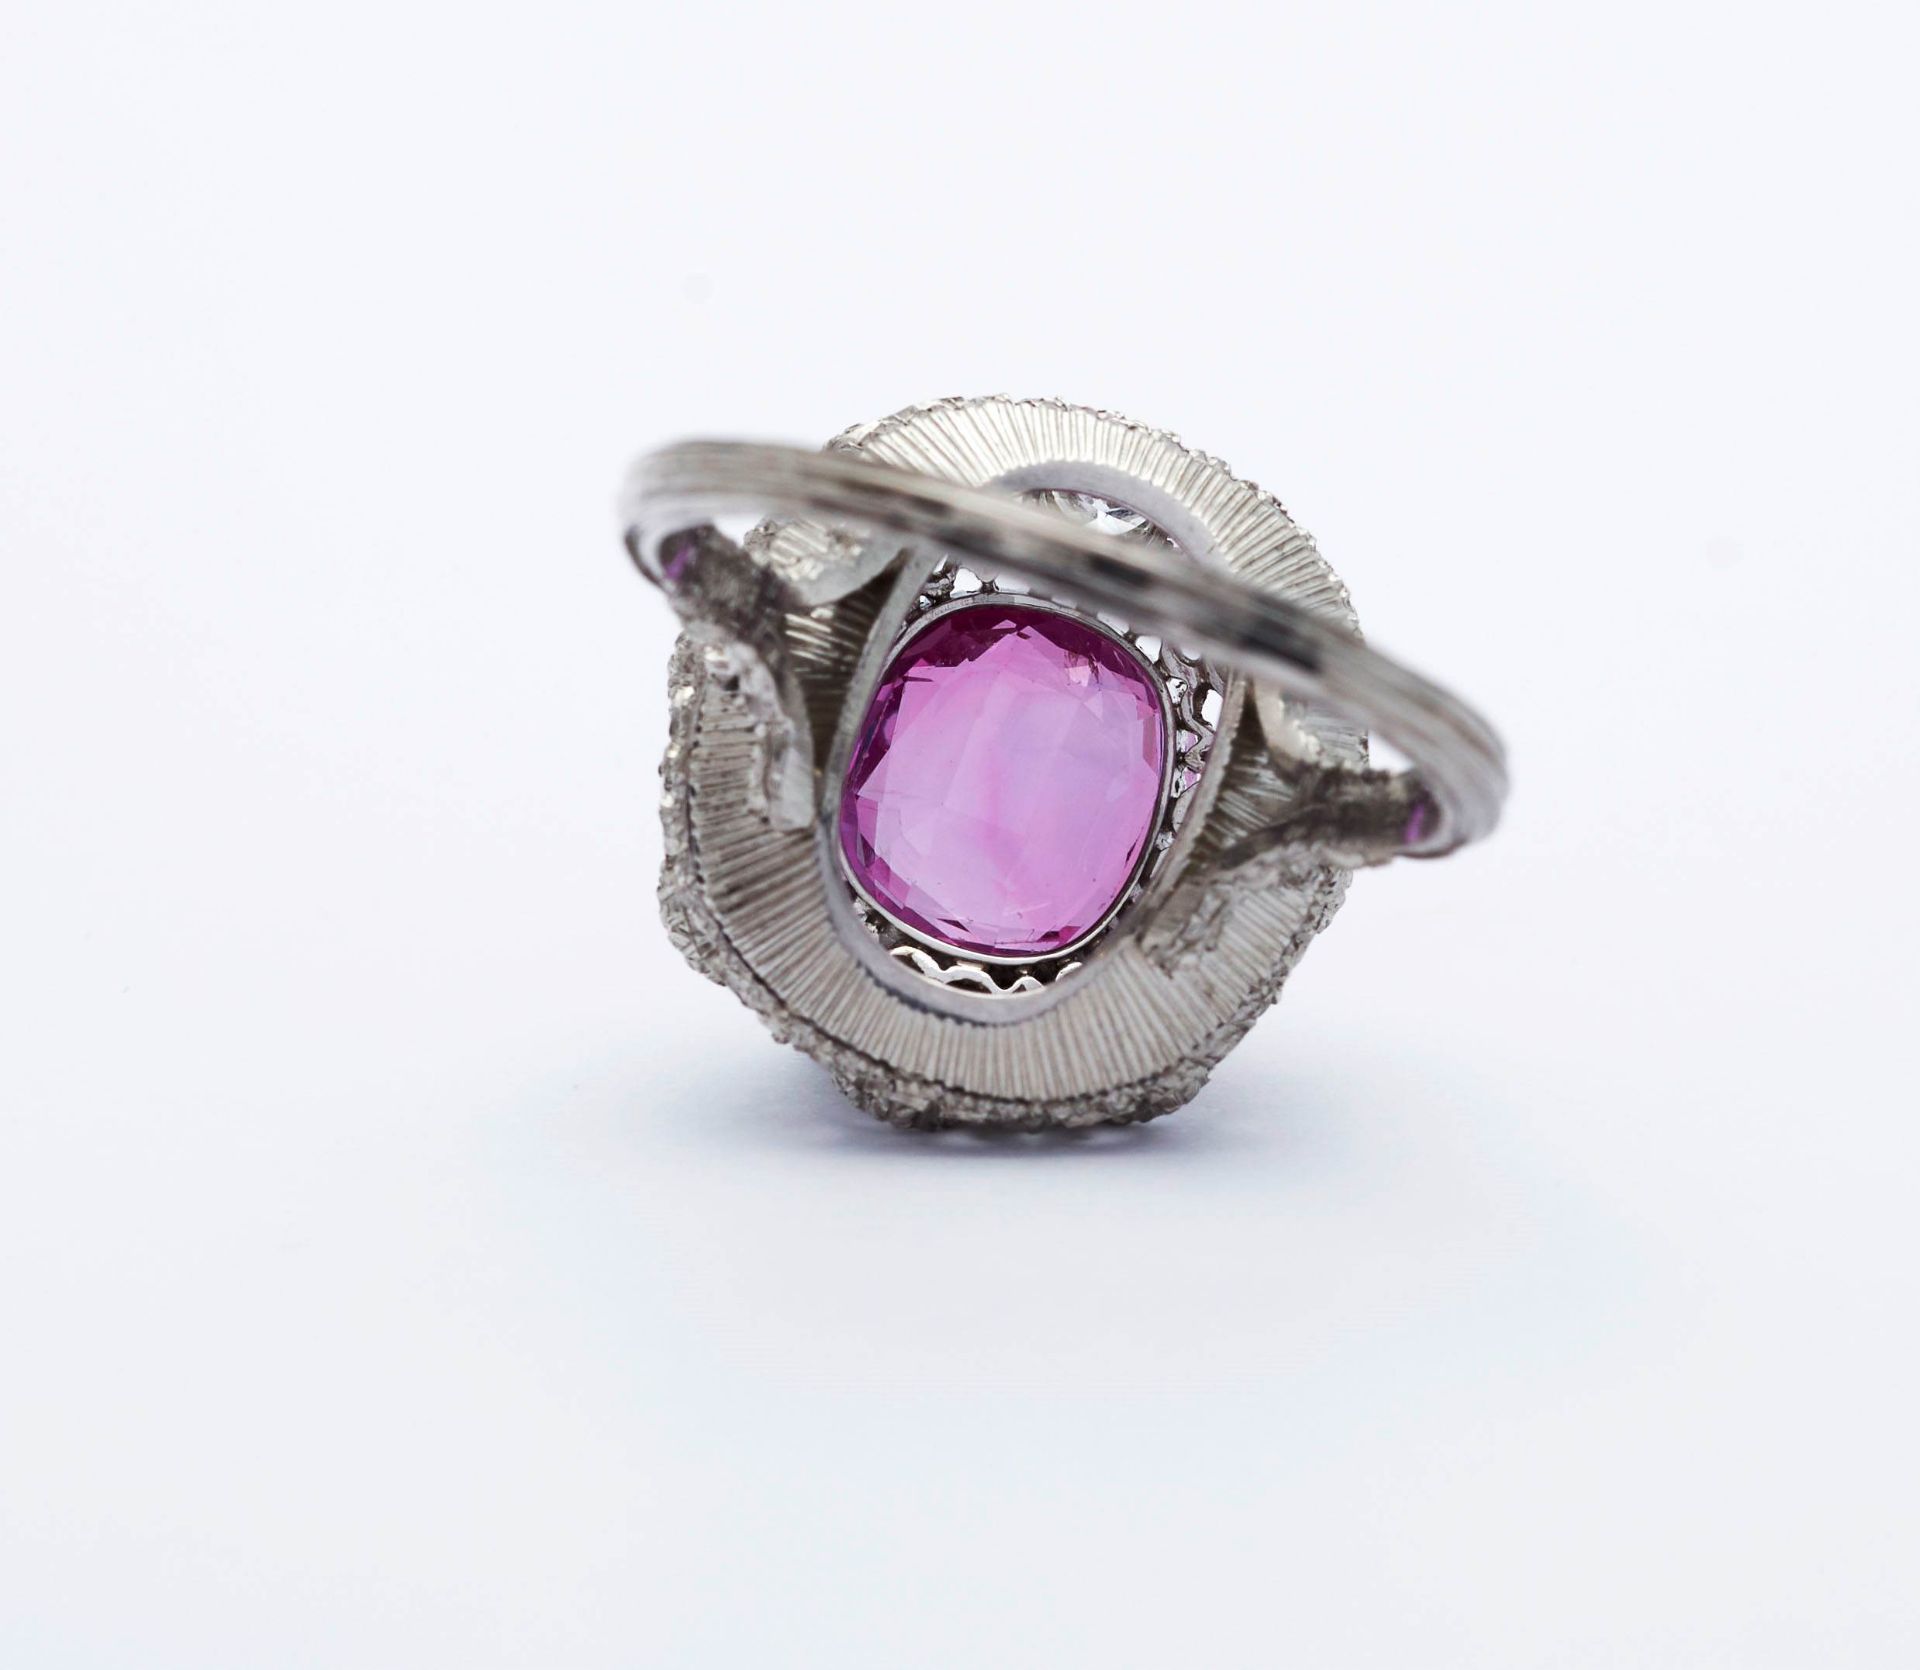 CEYLON PINK SAPPHIRE AND DIAMOND RING, BY BUCCELLATI. - Image 5 of 7